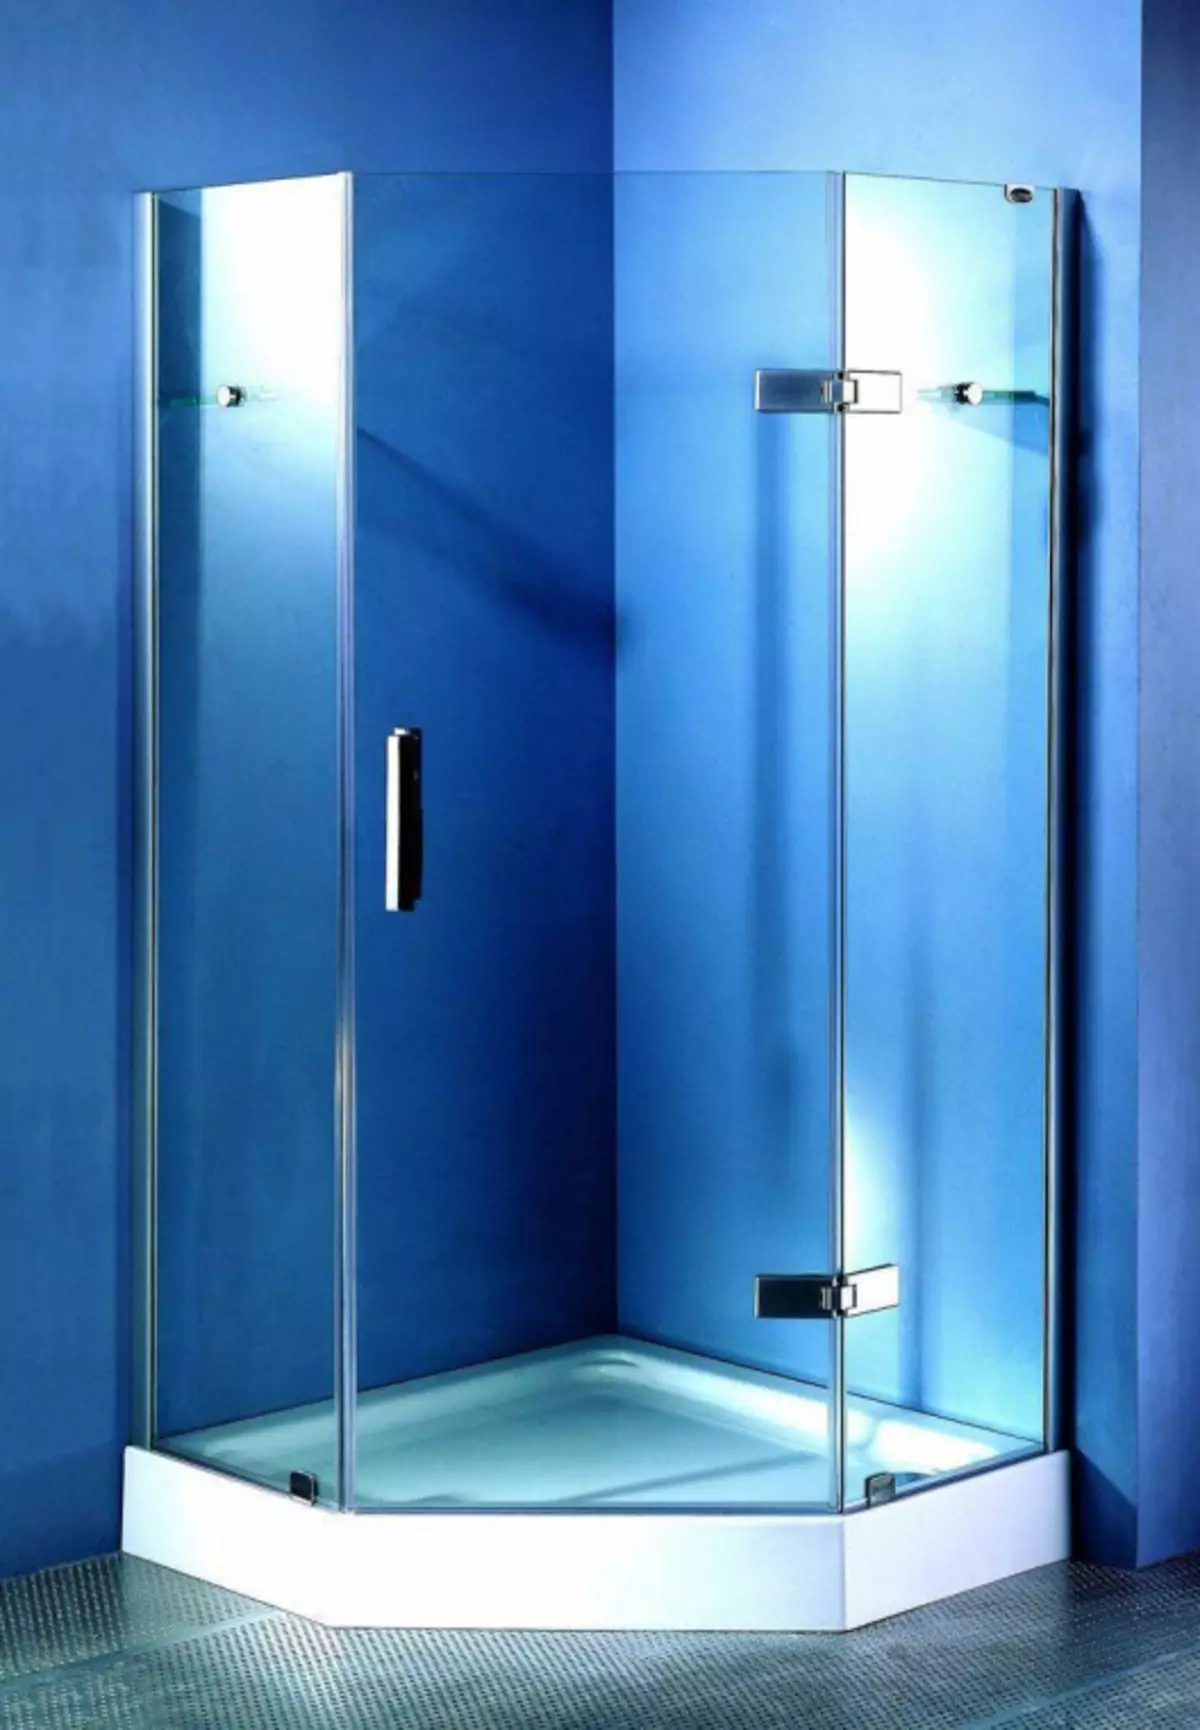 Vrata u tušem: sklopivi ugaoni, vrata 110-120 cm i 130-170 cm, ostale dimenzije. Modeli iz Njemačke i Italije, iz polikarbonata i vrata 21396_60